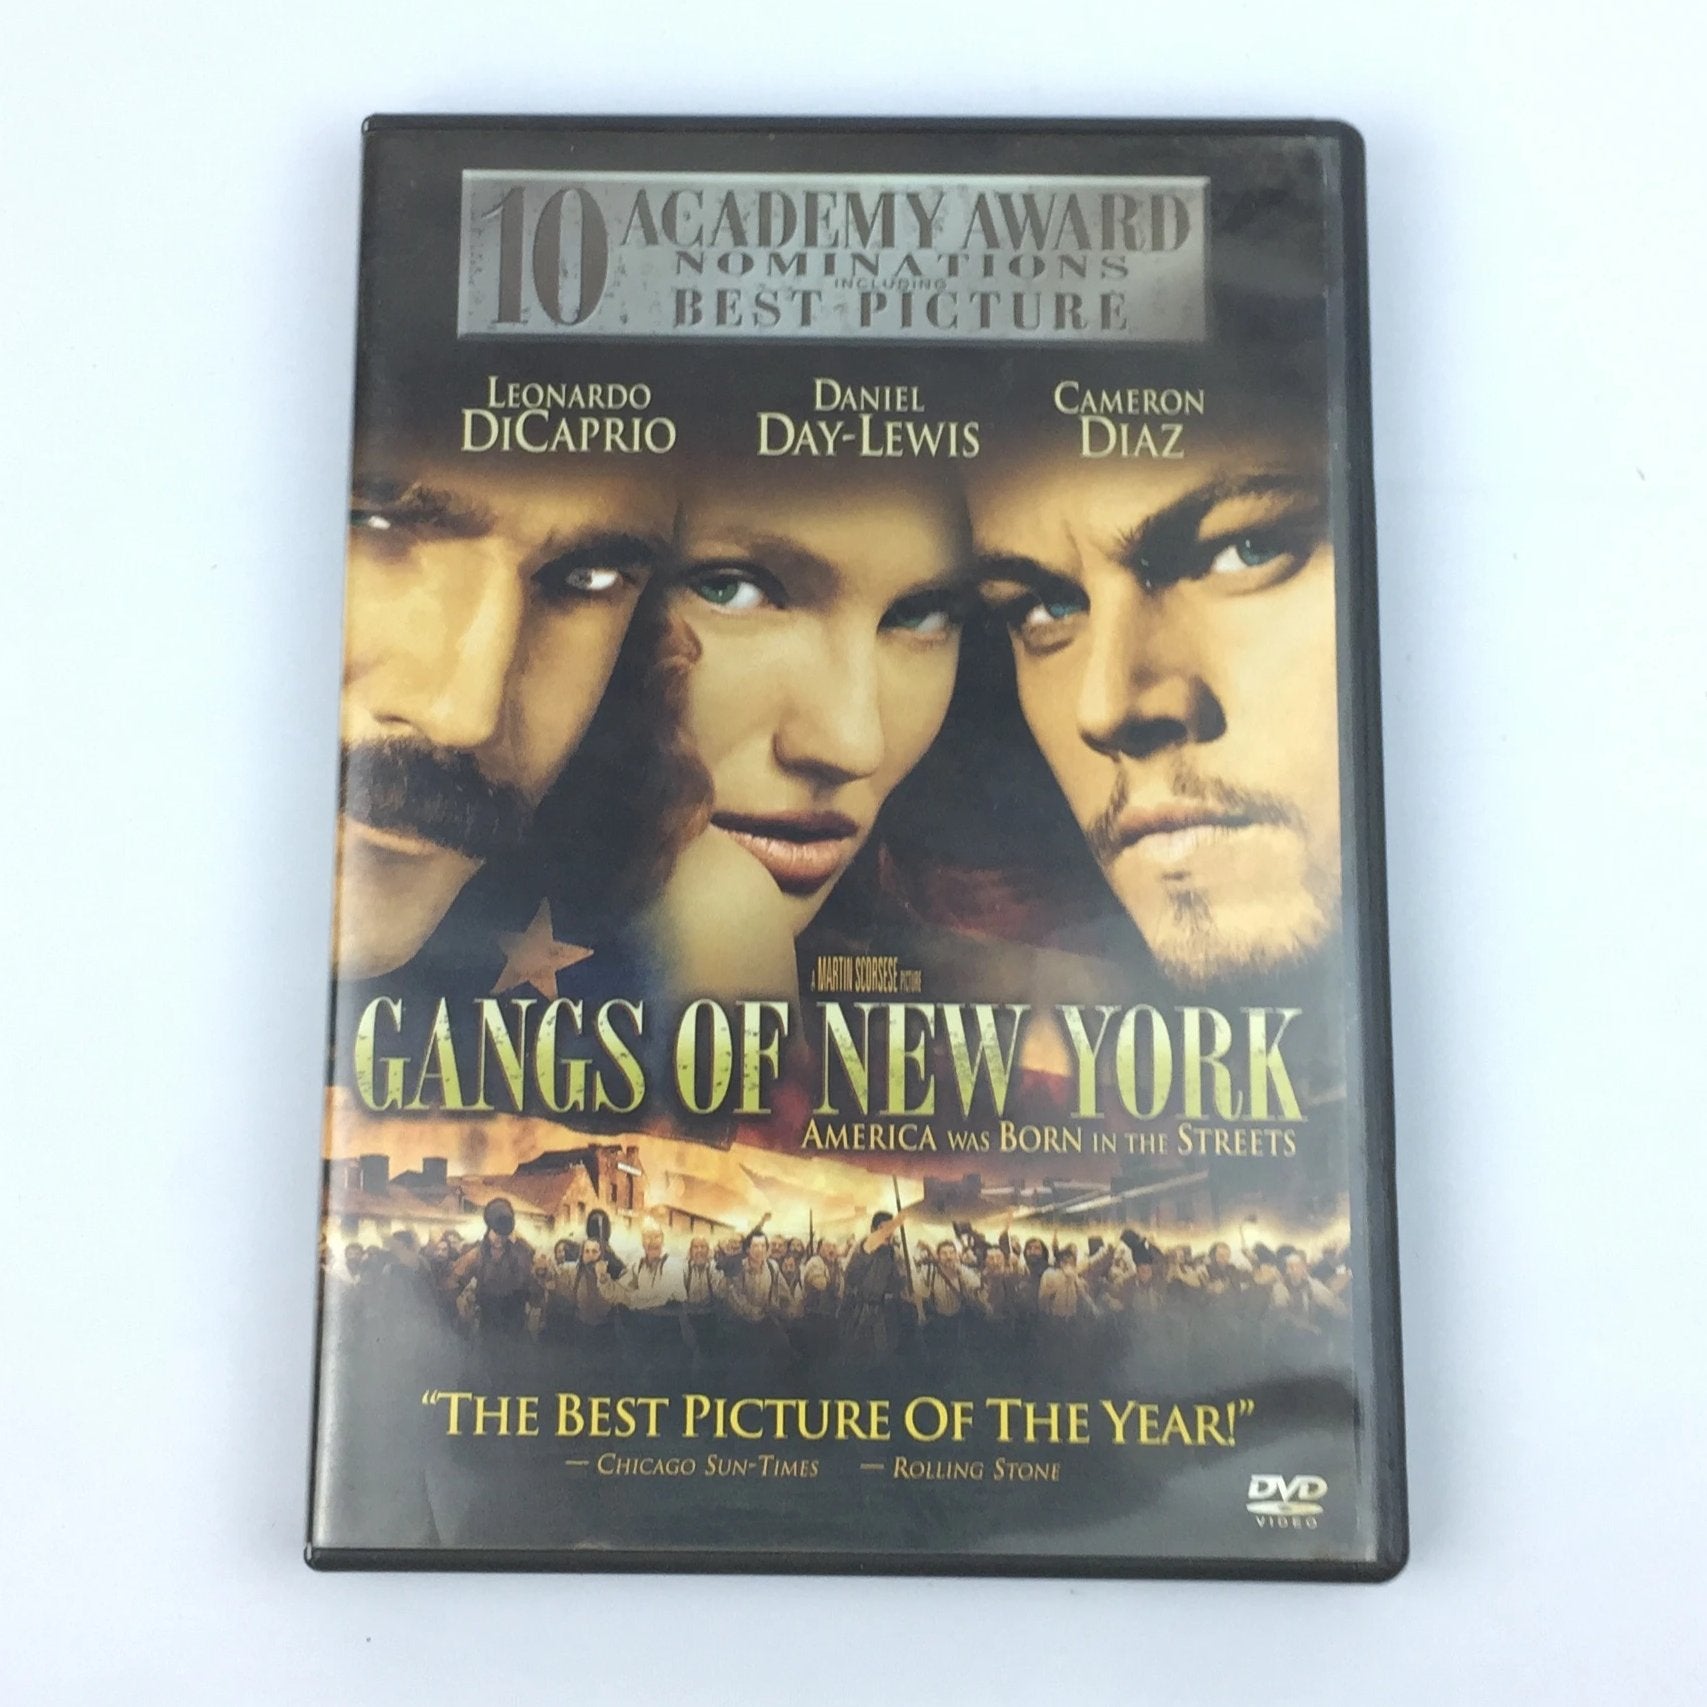 Gangs Of New York (DVD, 2003) Leonardo DiCaprio, Daniel Day-Lewis, Cameron Diaz